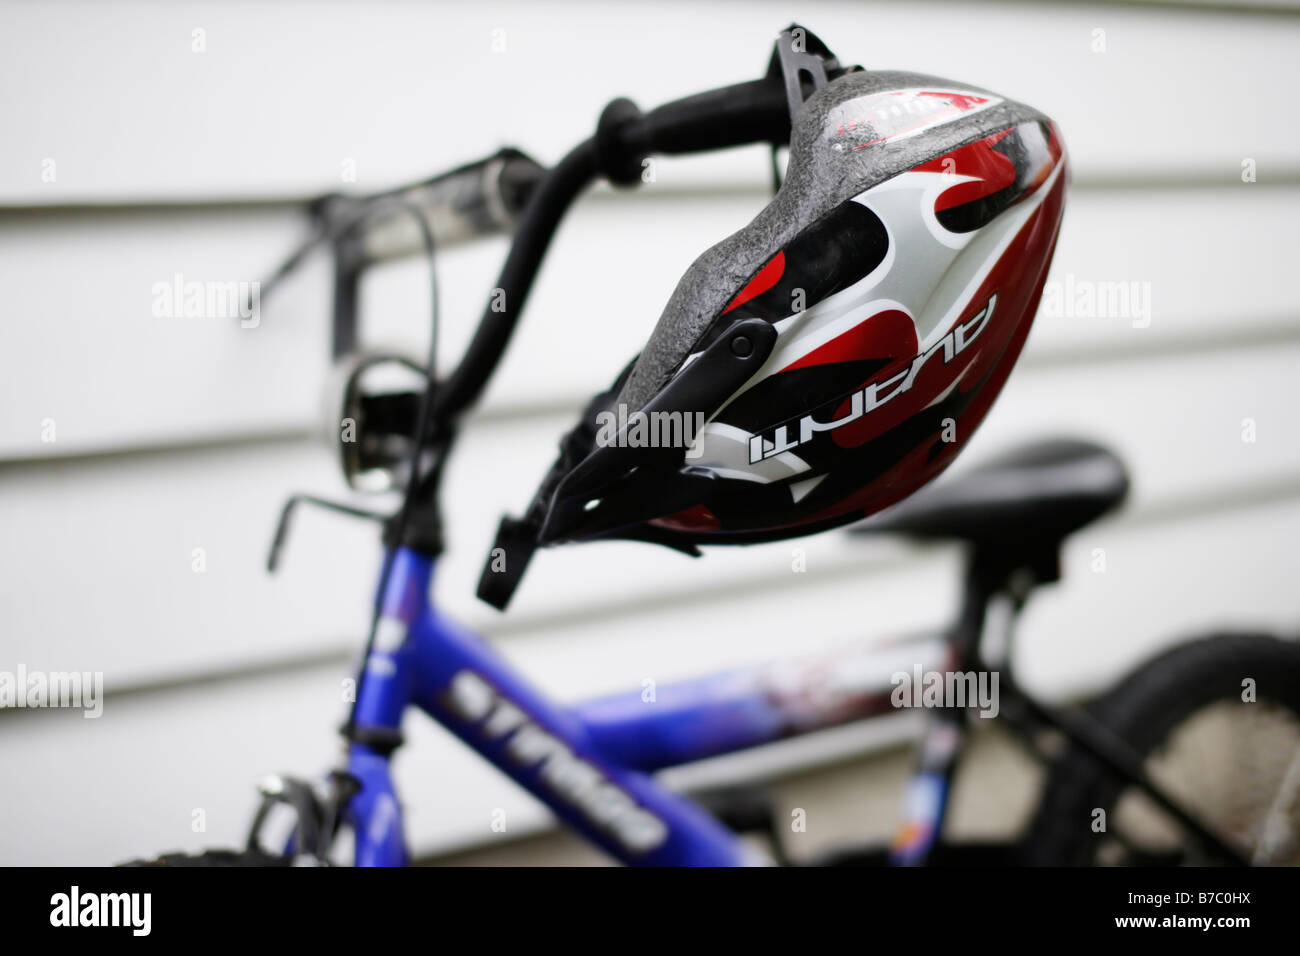 Boy's bike helmet hangs from handlebar Stock Photo